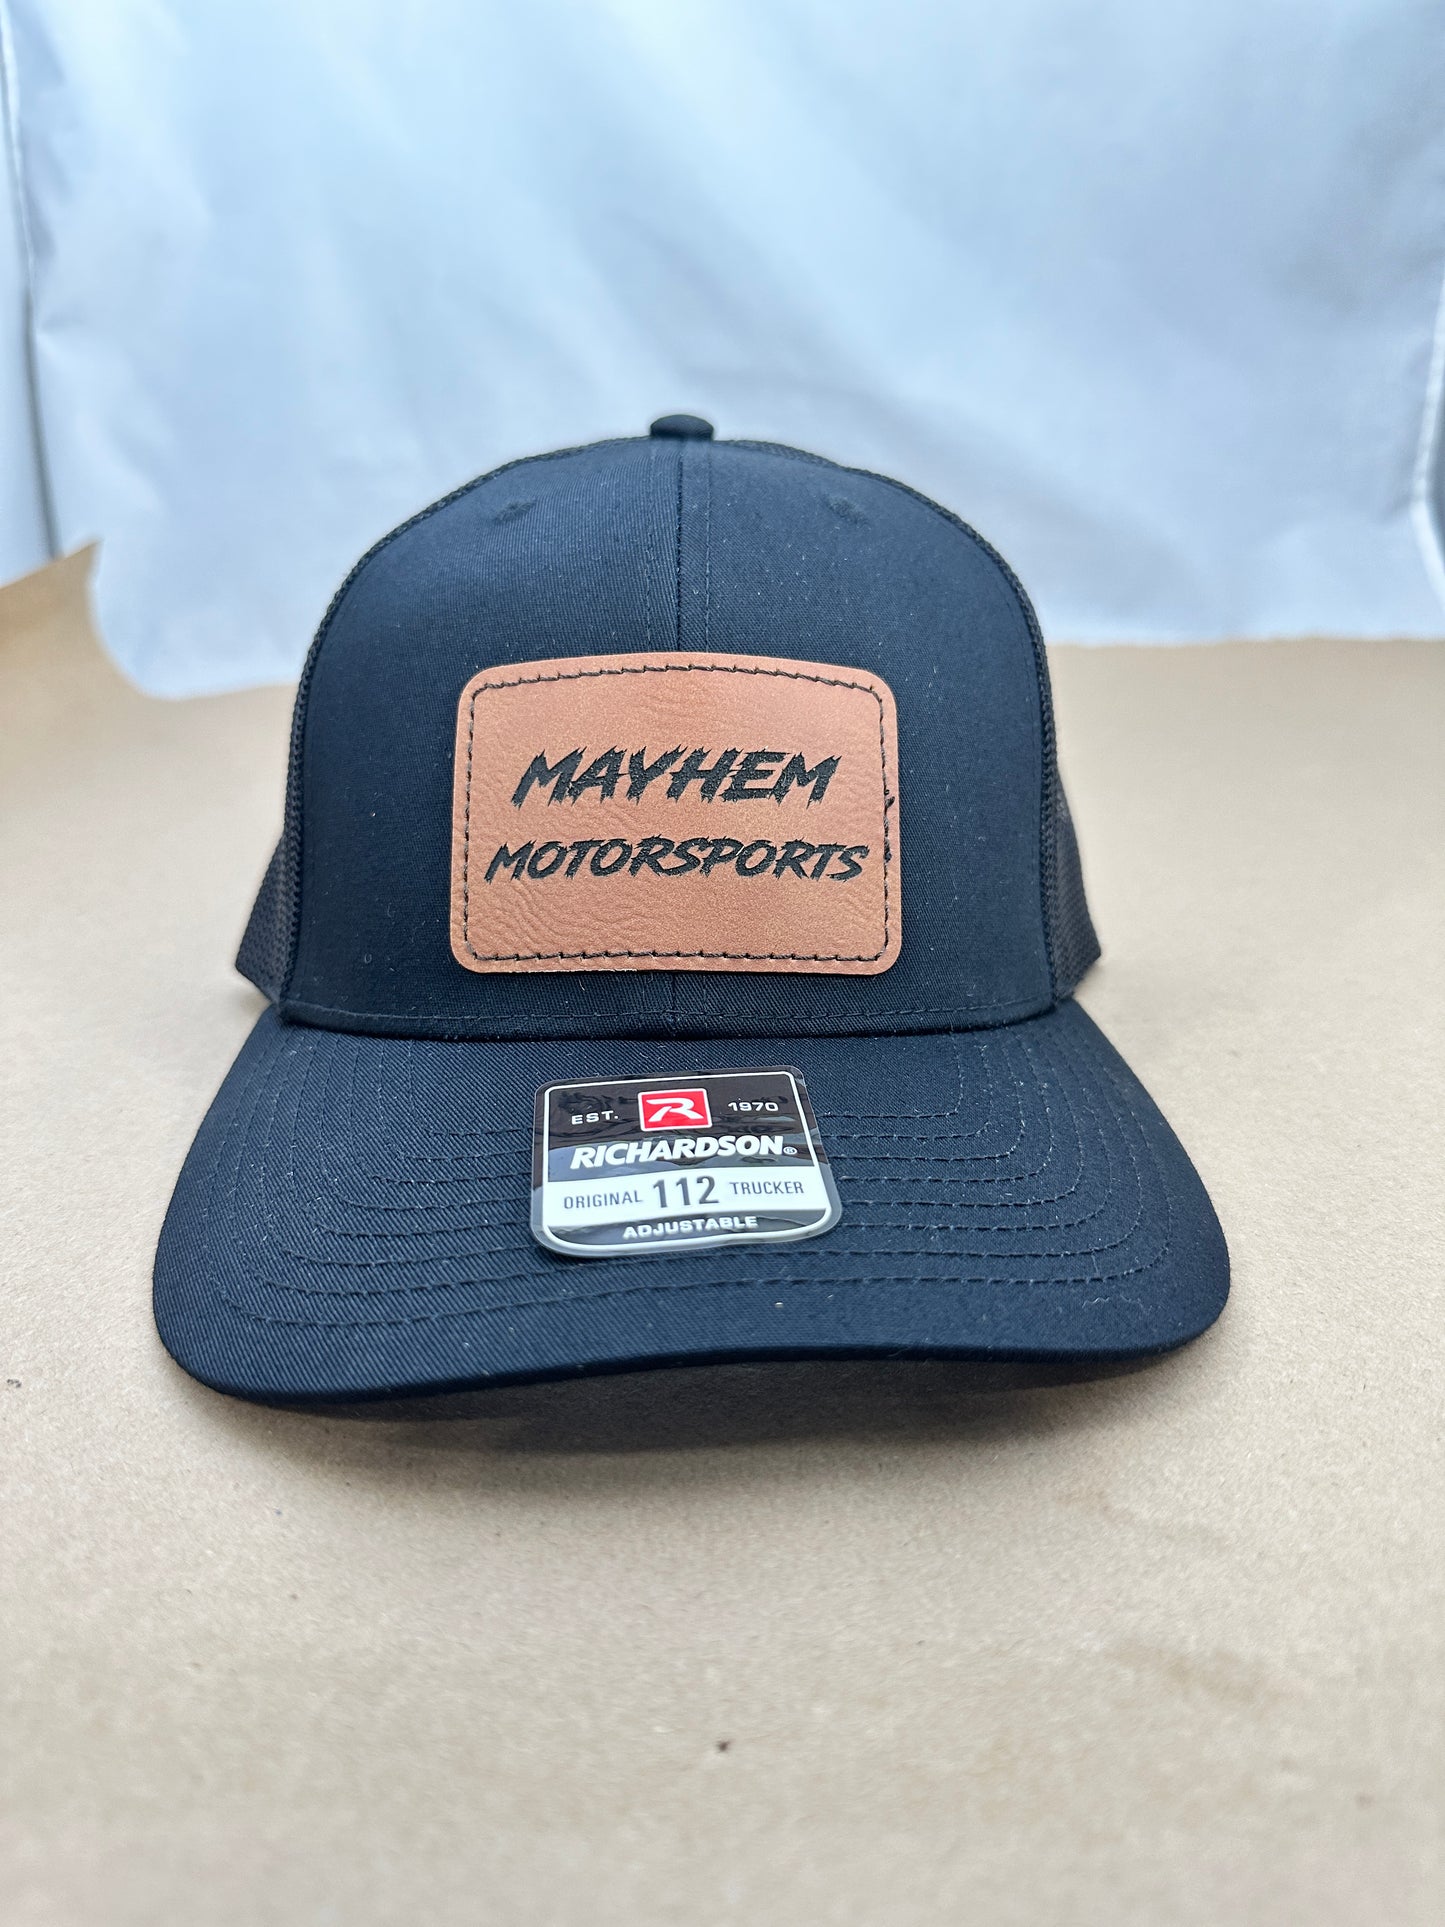 Richardson 112 Trucker Snap Back Laser Engraved Leather Patch Hat